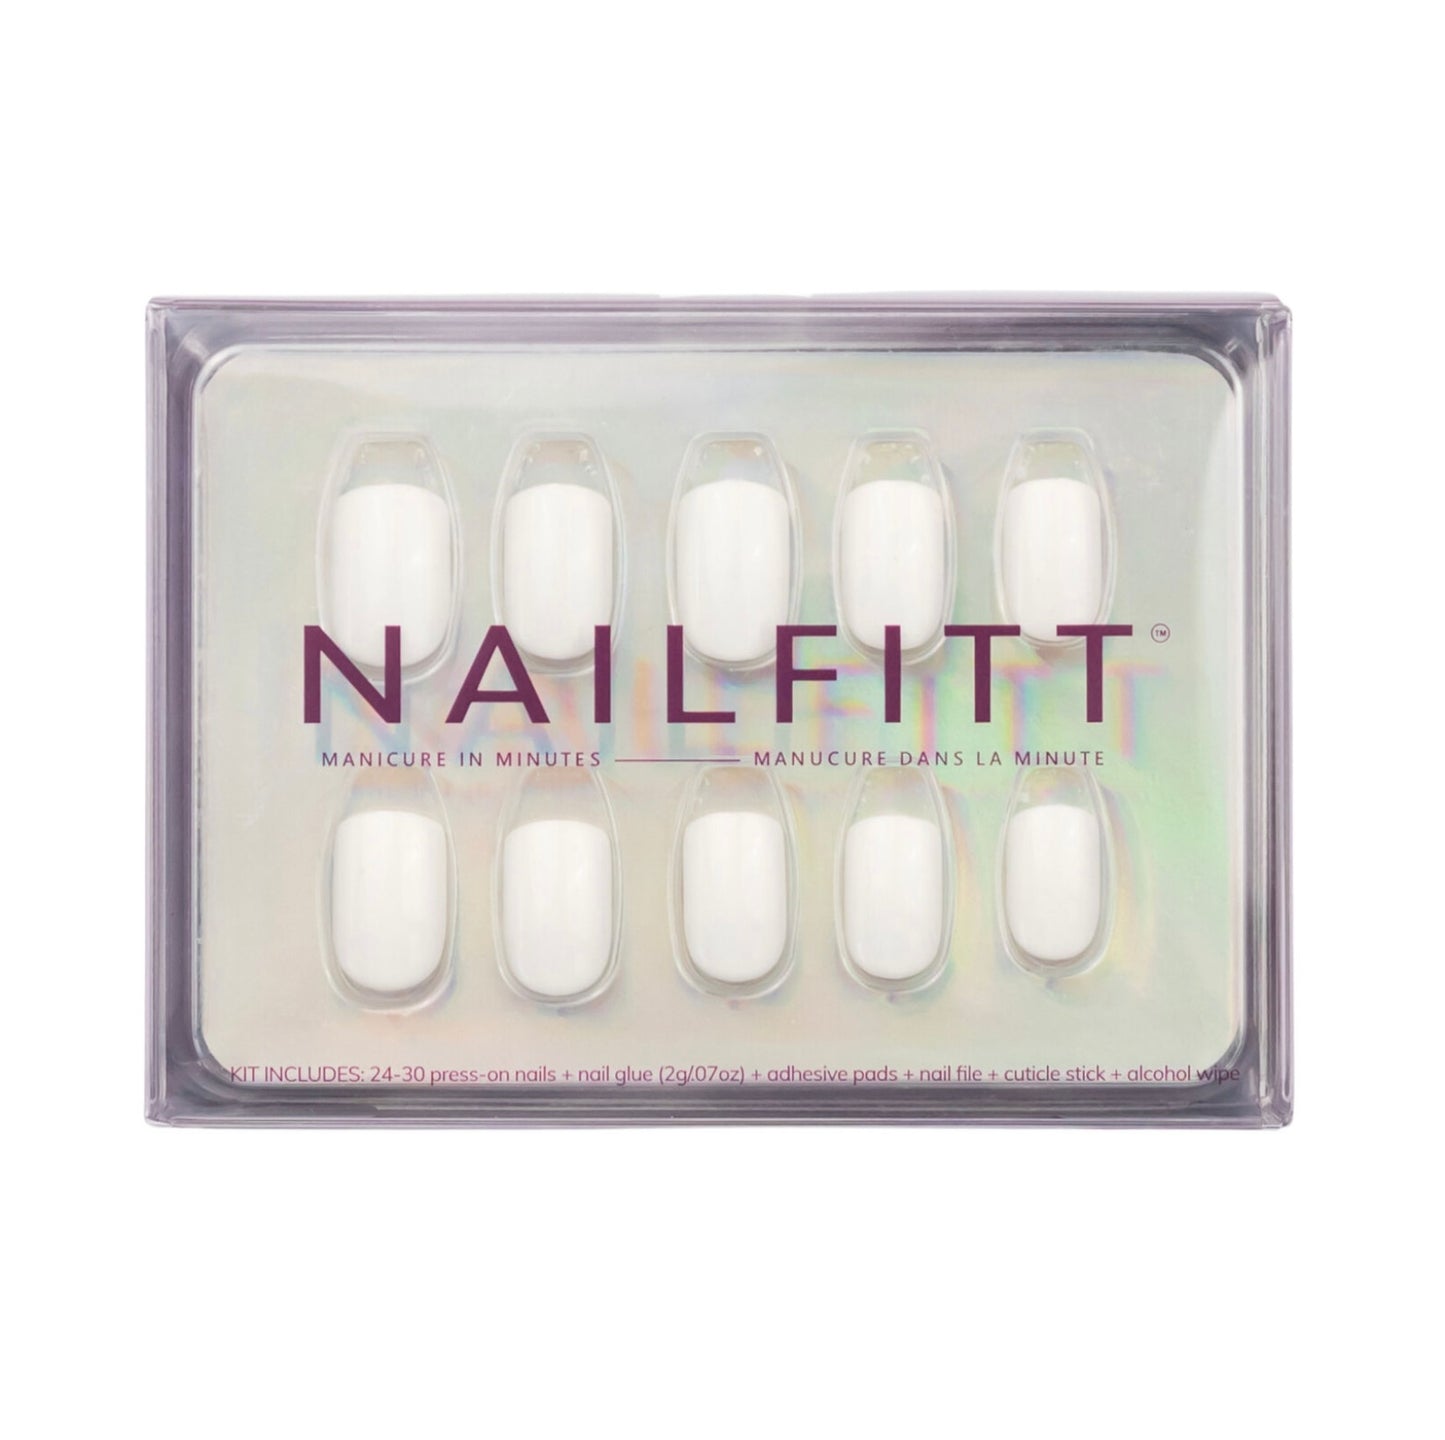 White short squoval press-on nails from Nailfitt